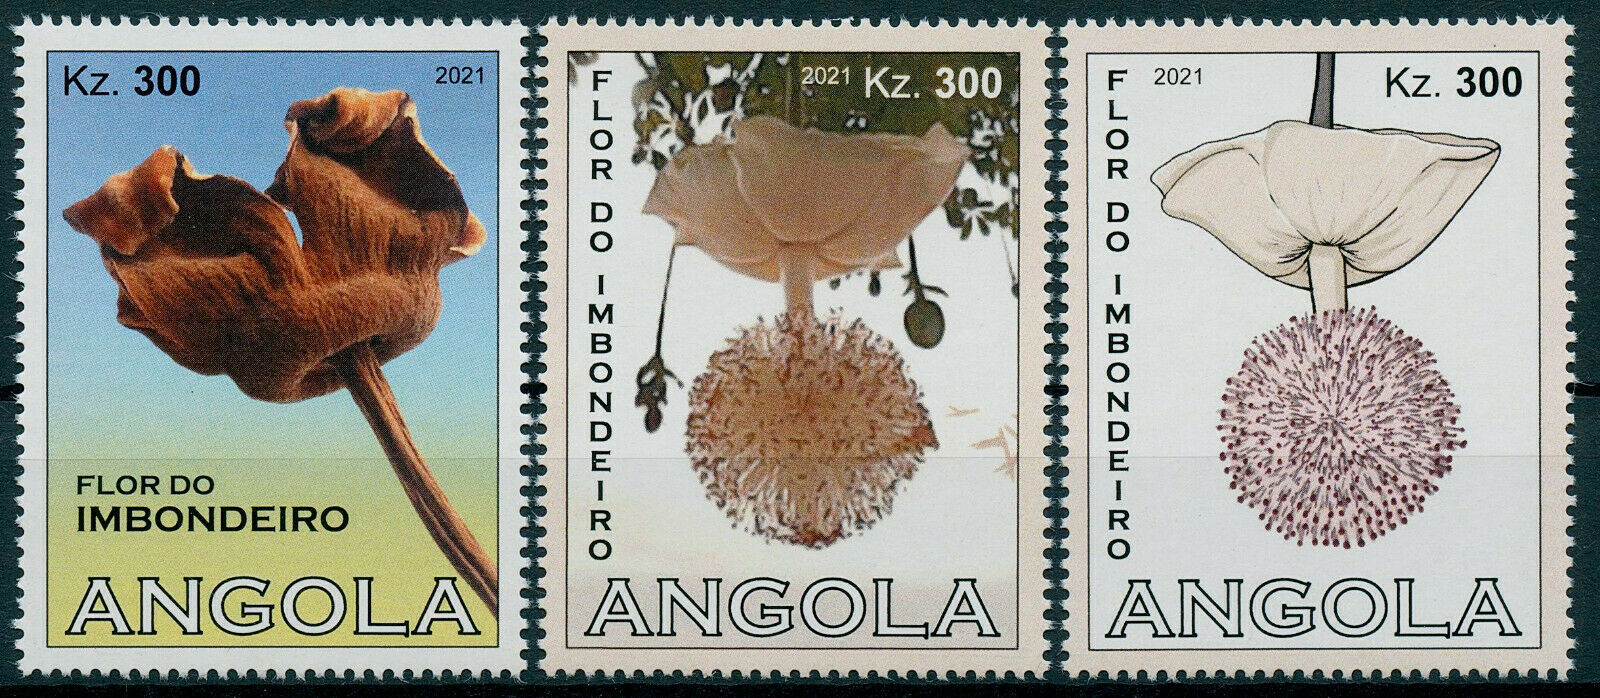 Angola 2021 MNH Flowers Stamps Baobab Flowers Trees Nature & Plants 3v Set